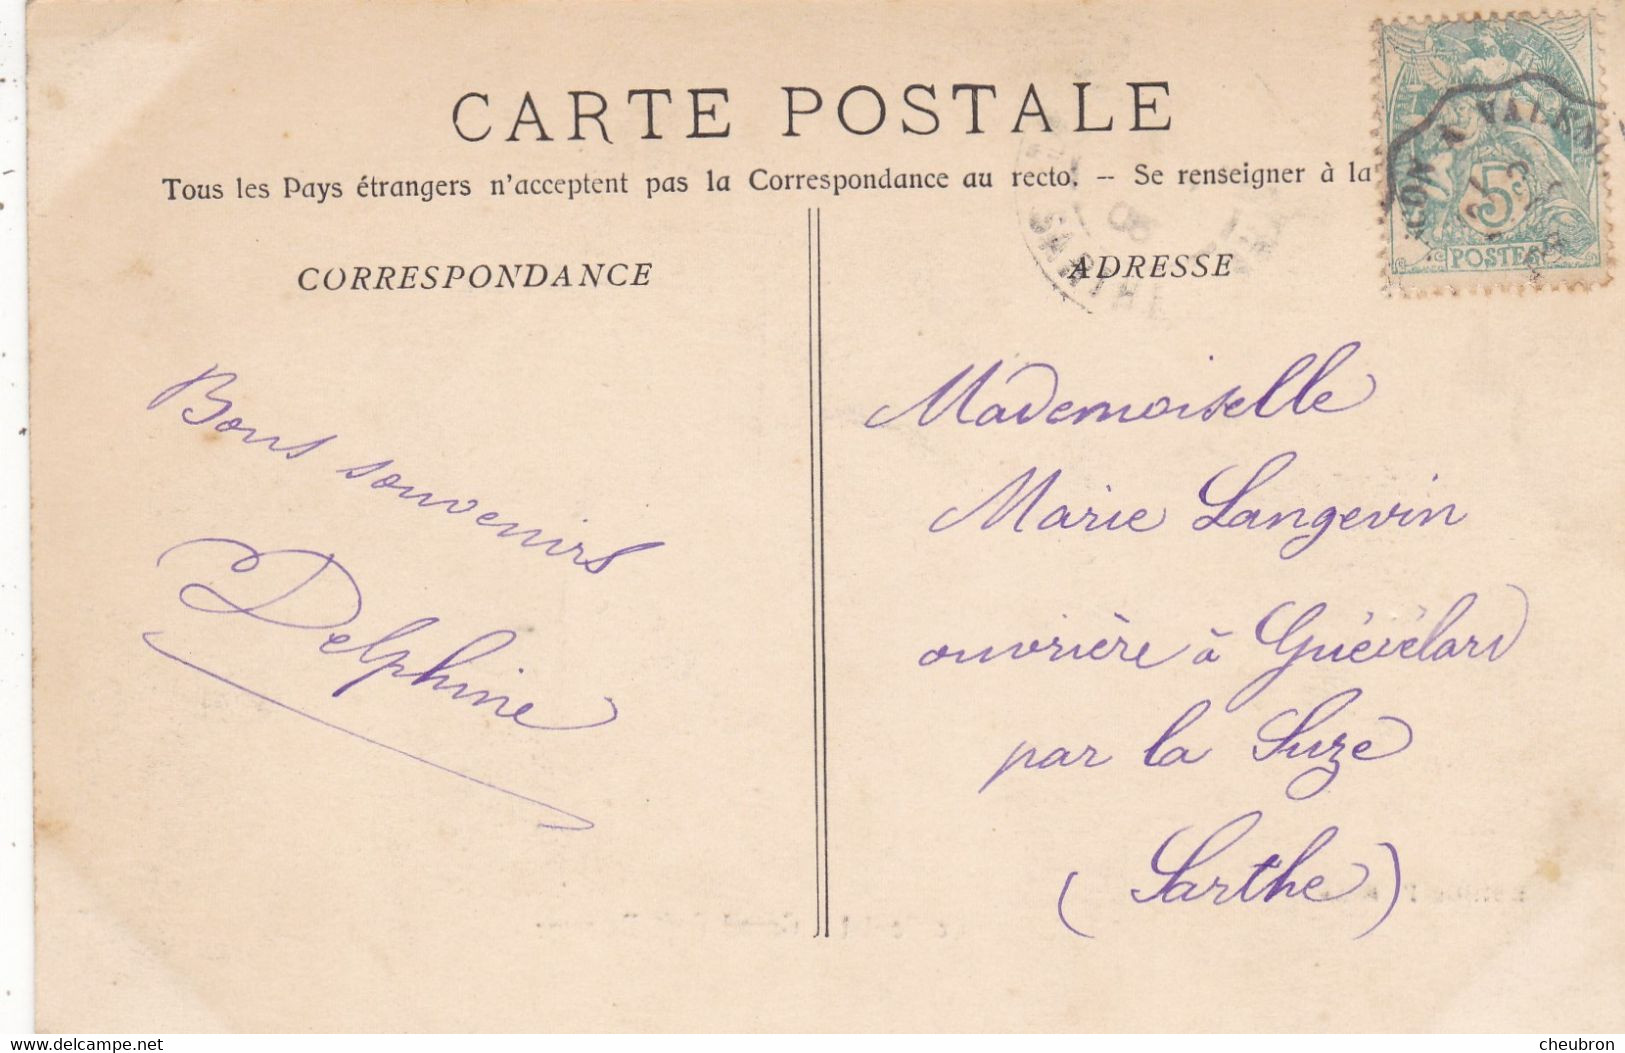 84. LE PONTET .  CPA.  GRAND CAFE DELORME. ANIMATION . ANNEE 1906 + TEXTE - Le Pontet